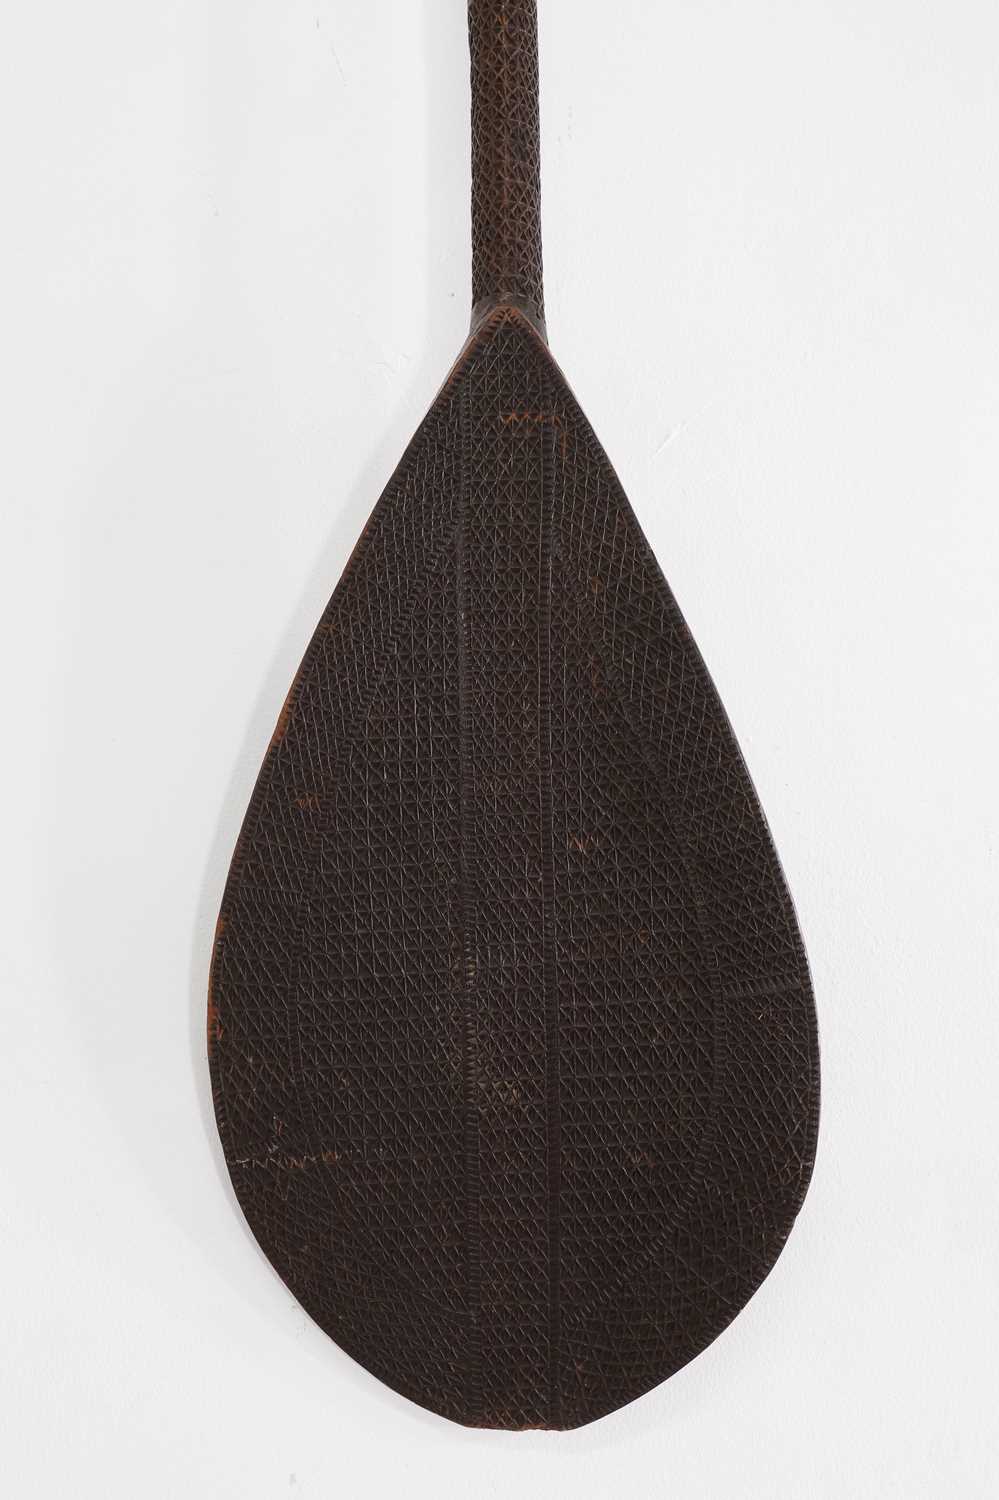 Lot 300 - A carved hardwood paddle